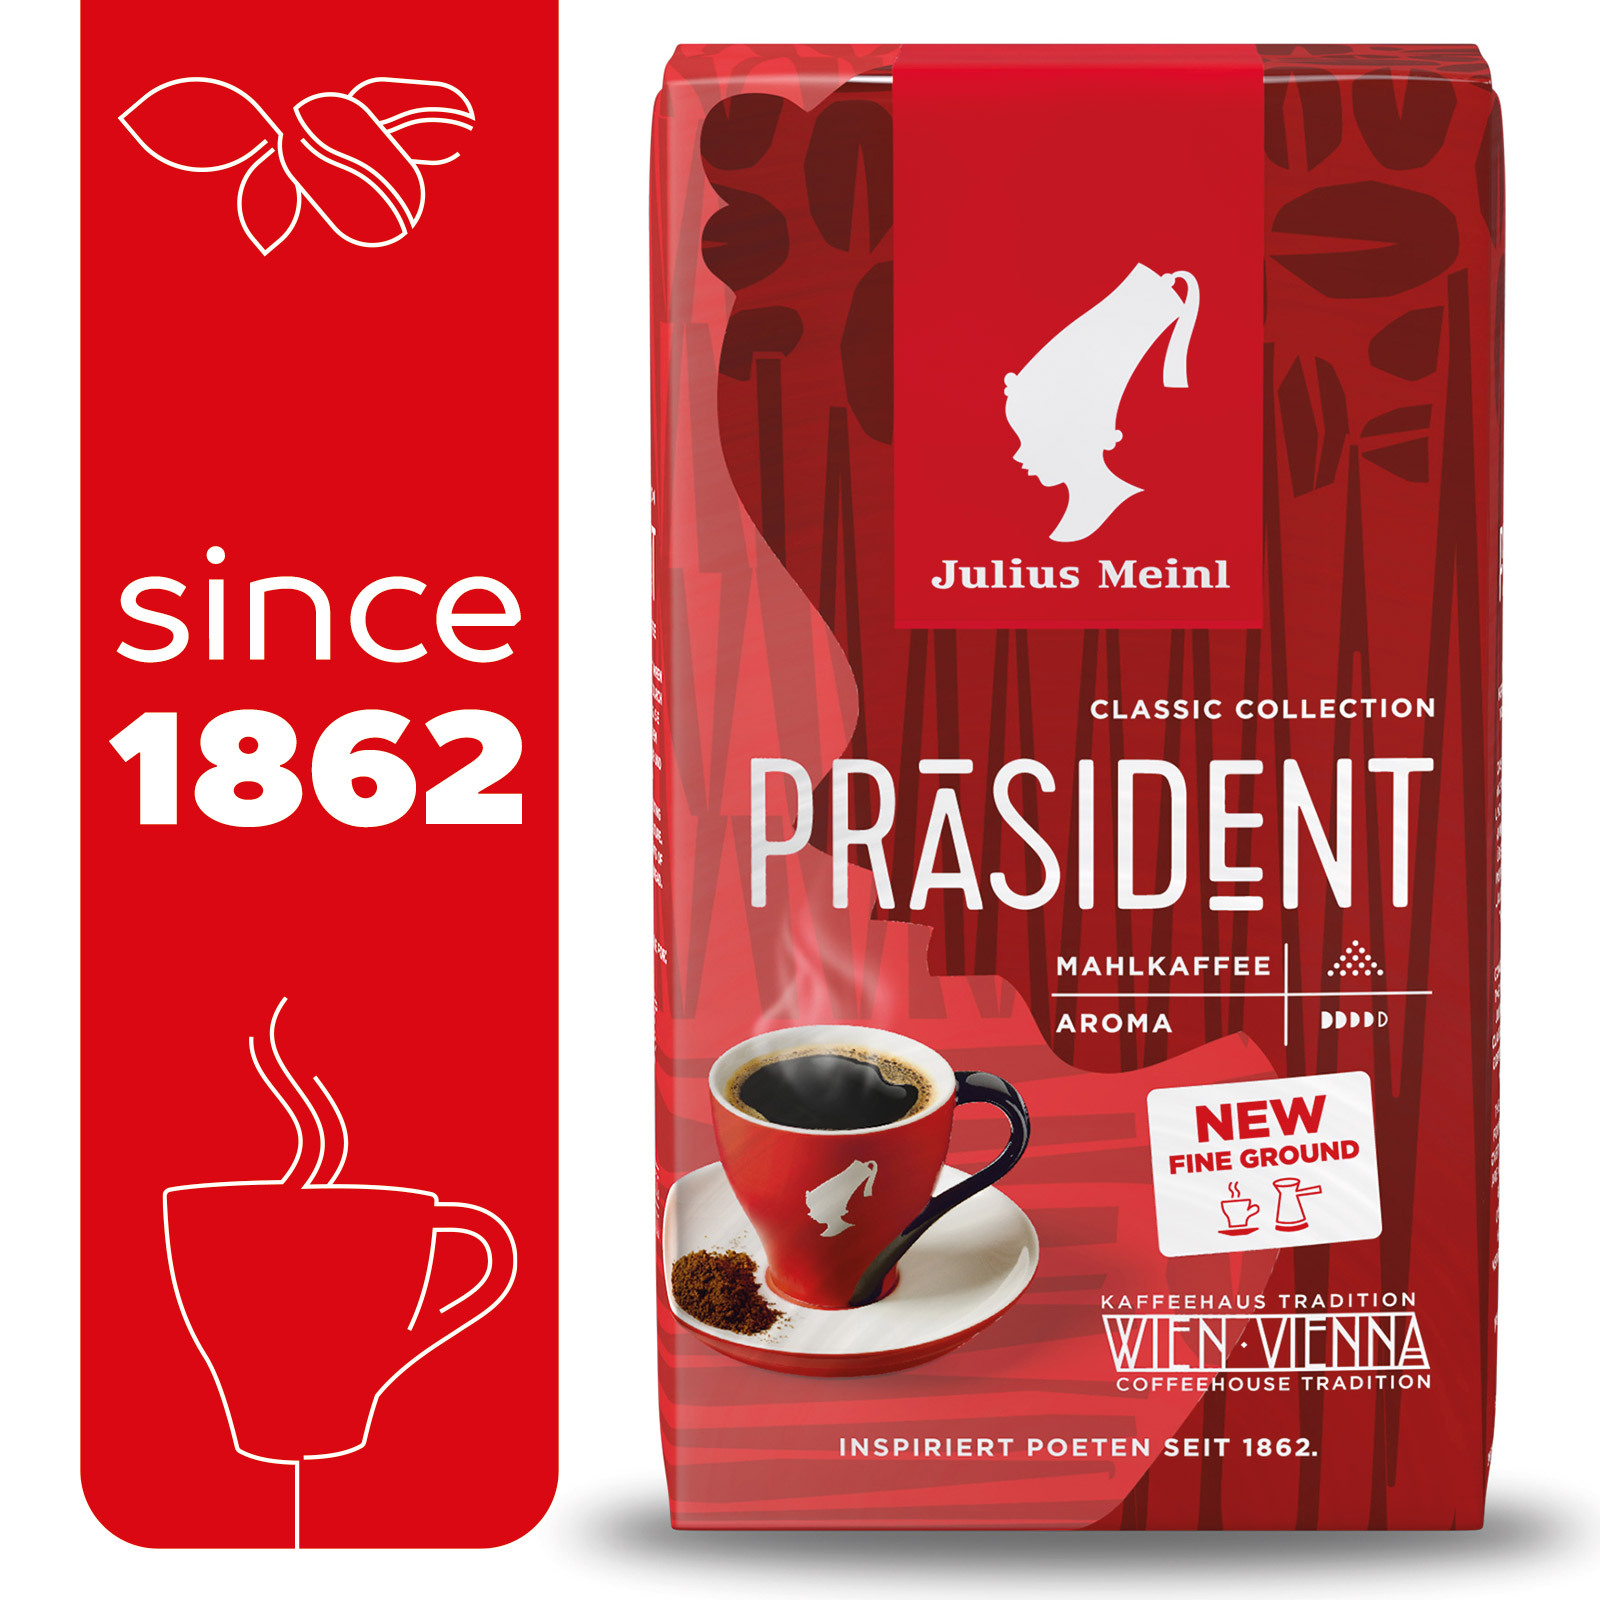 Julius кофе молотый. Julius Meinl President молотый. Кофе молотый Julius Meinl President. Gusto pieno кофе Julius Meinl.